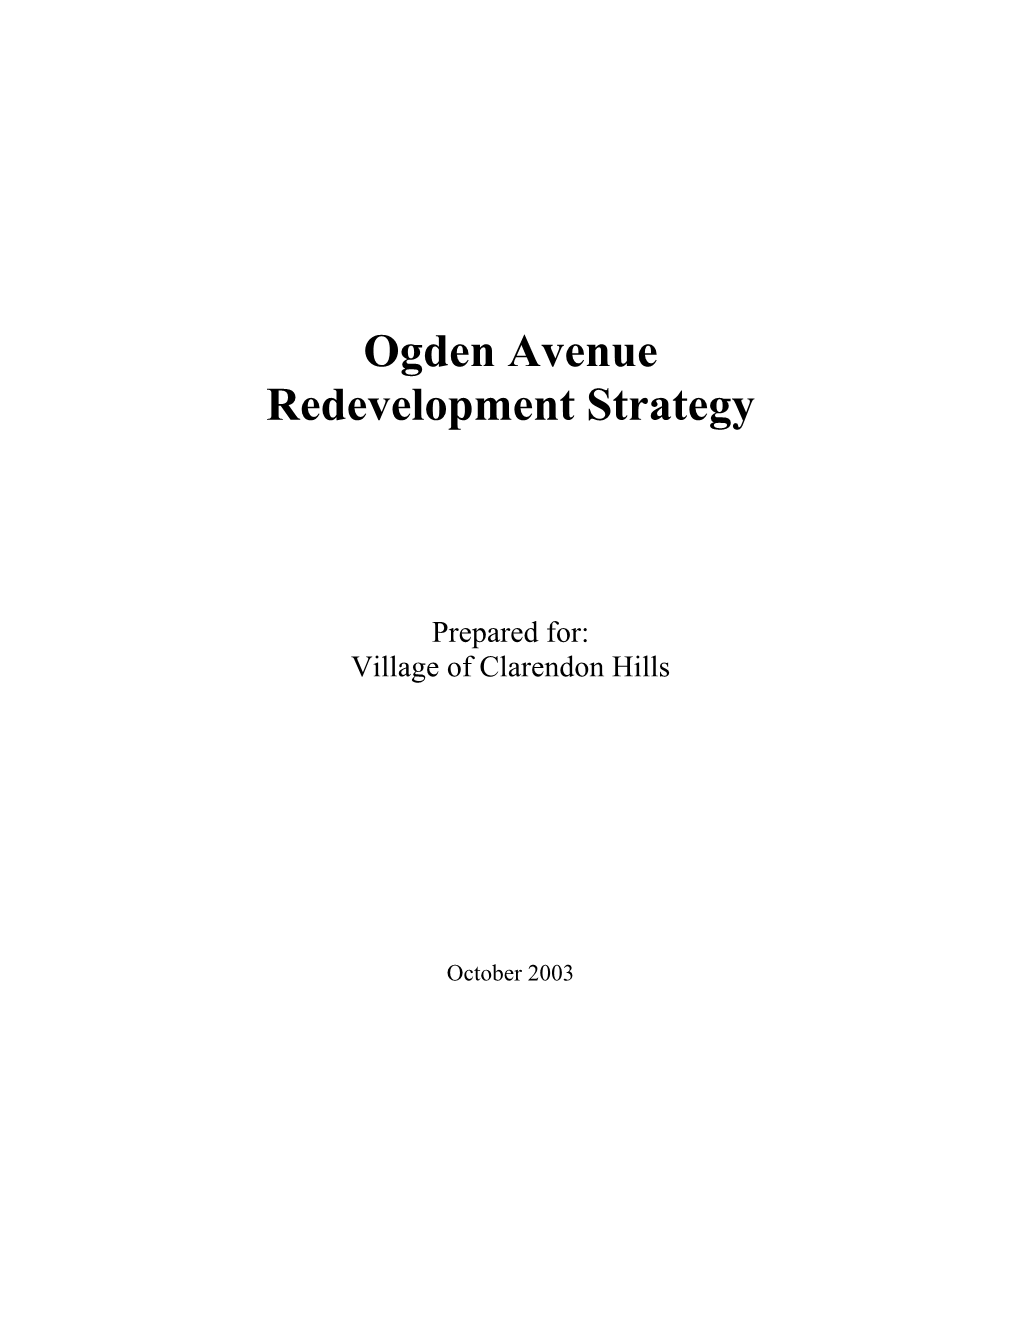 Ogden Avenue Redevelopment Strategy